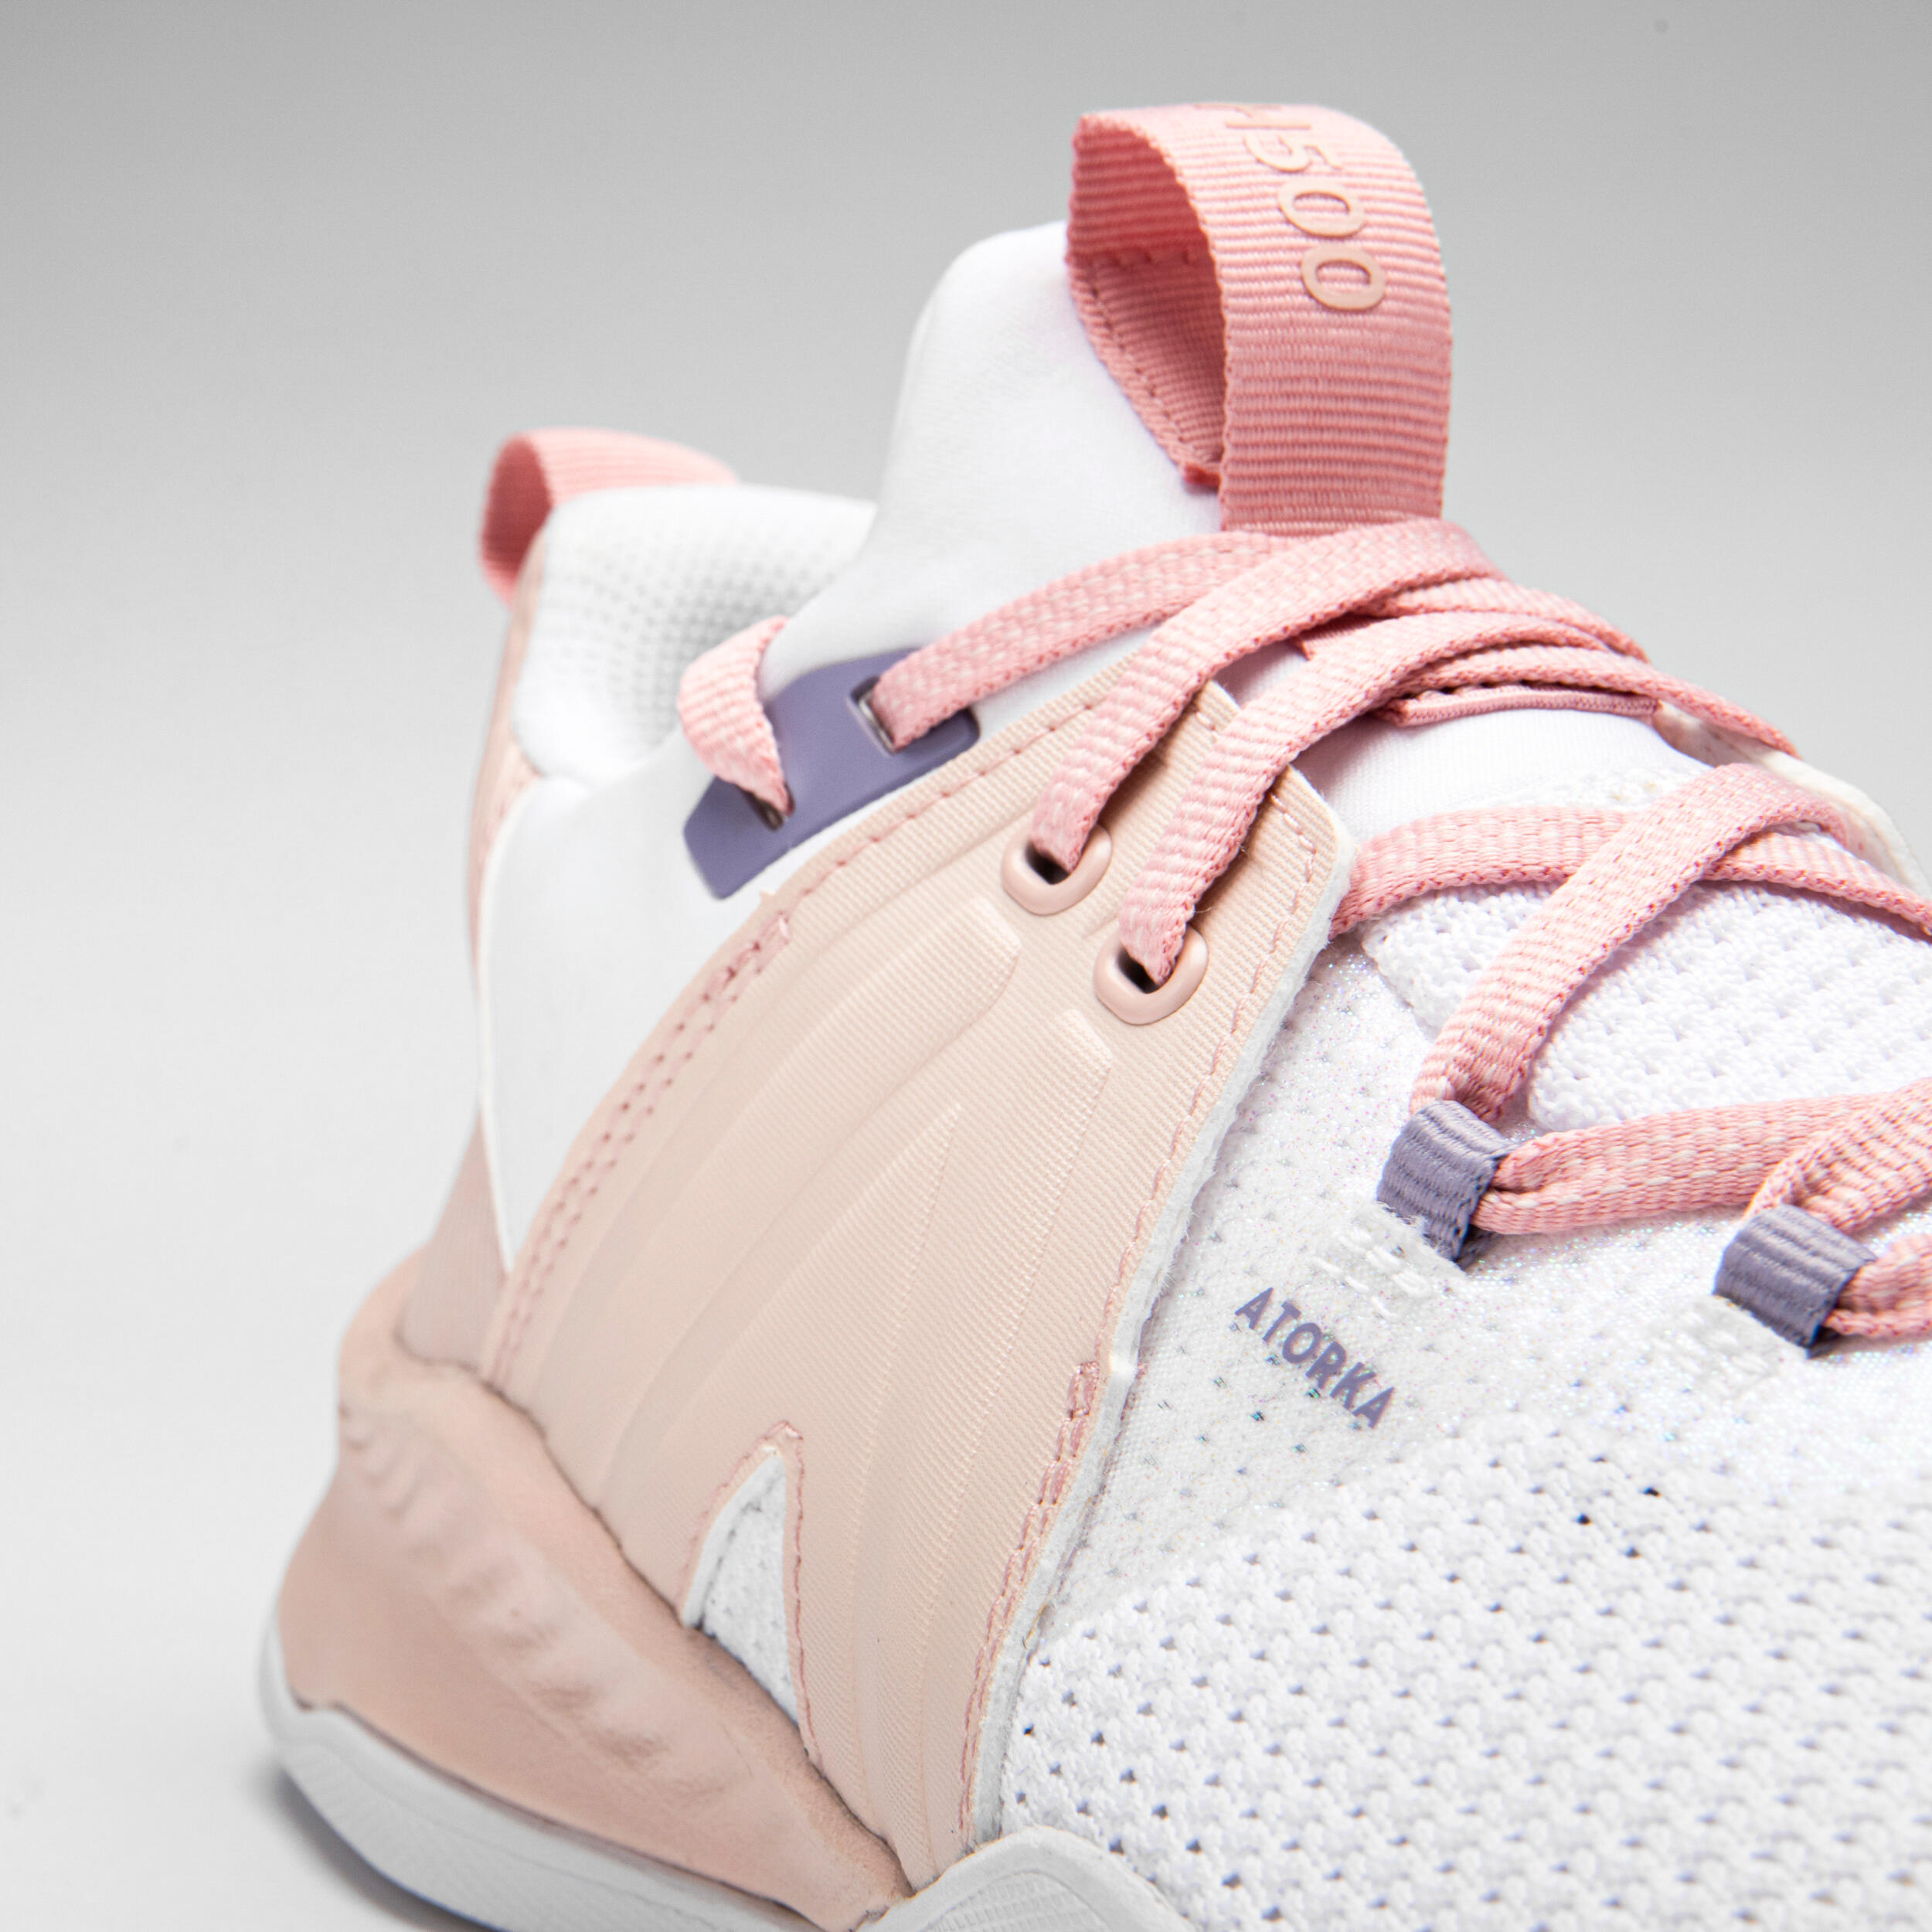 Men's/Women's Handball Shoes H500 Faster - Pink/White 10/17